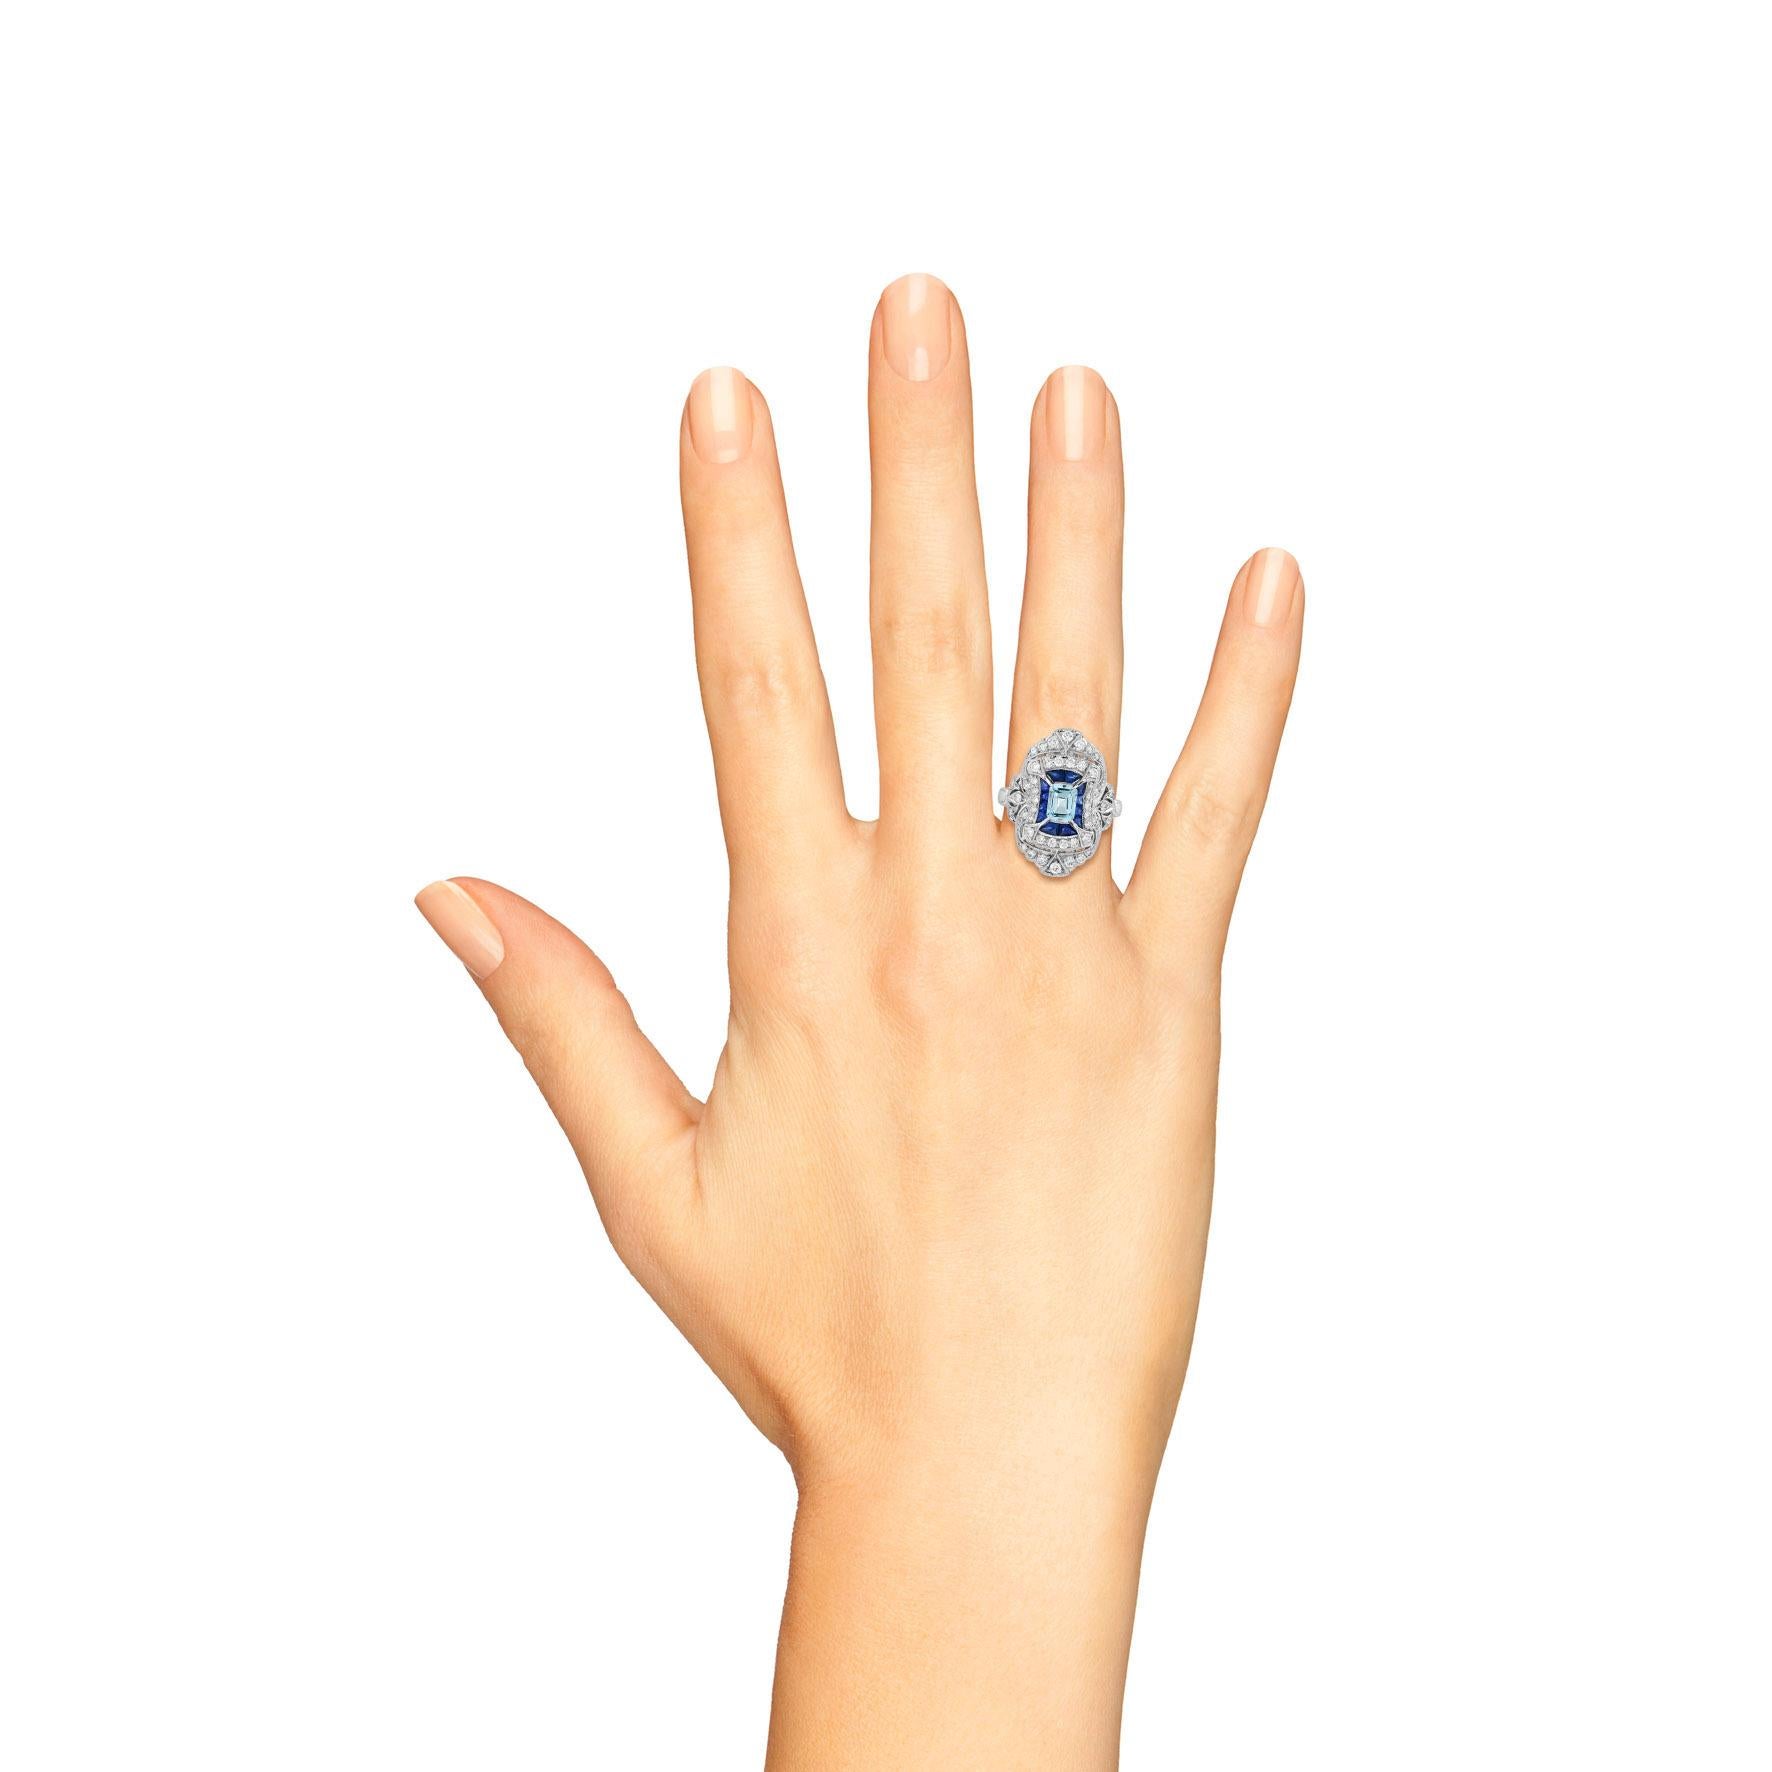 For Sale:  Aquamarine Blue Sapphire Diamond Art Deco Style Dinner Ring in 18K White Gold 2